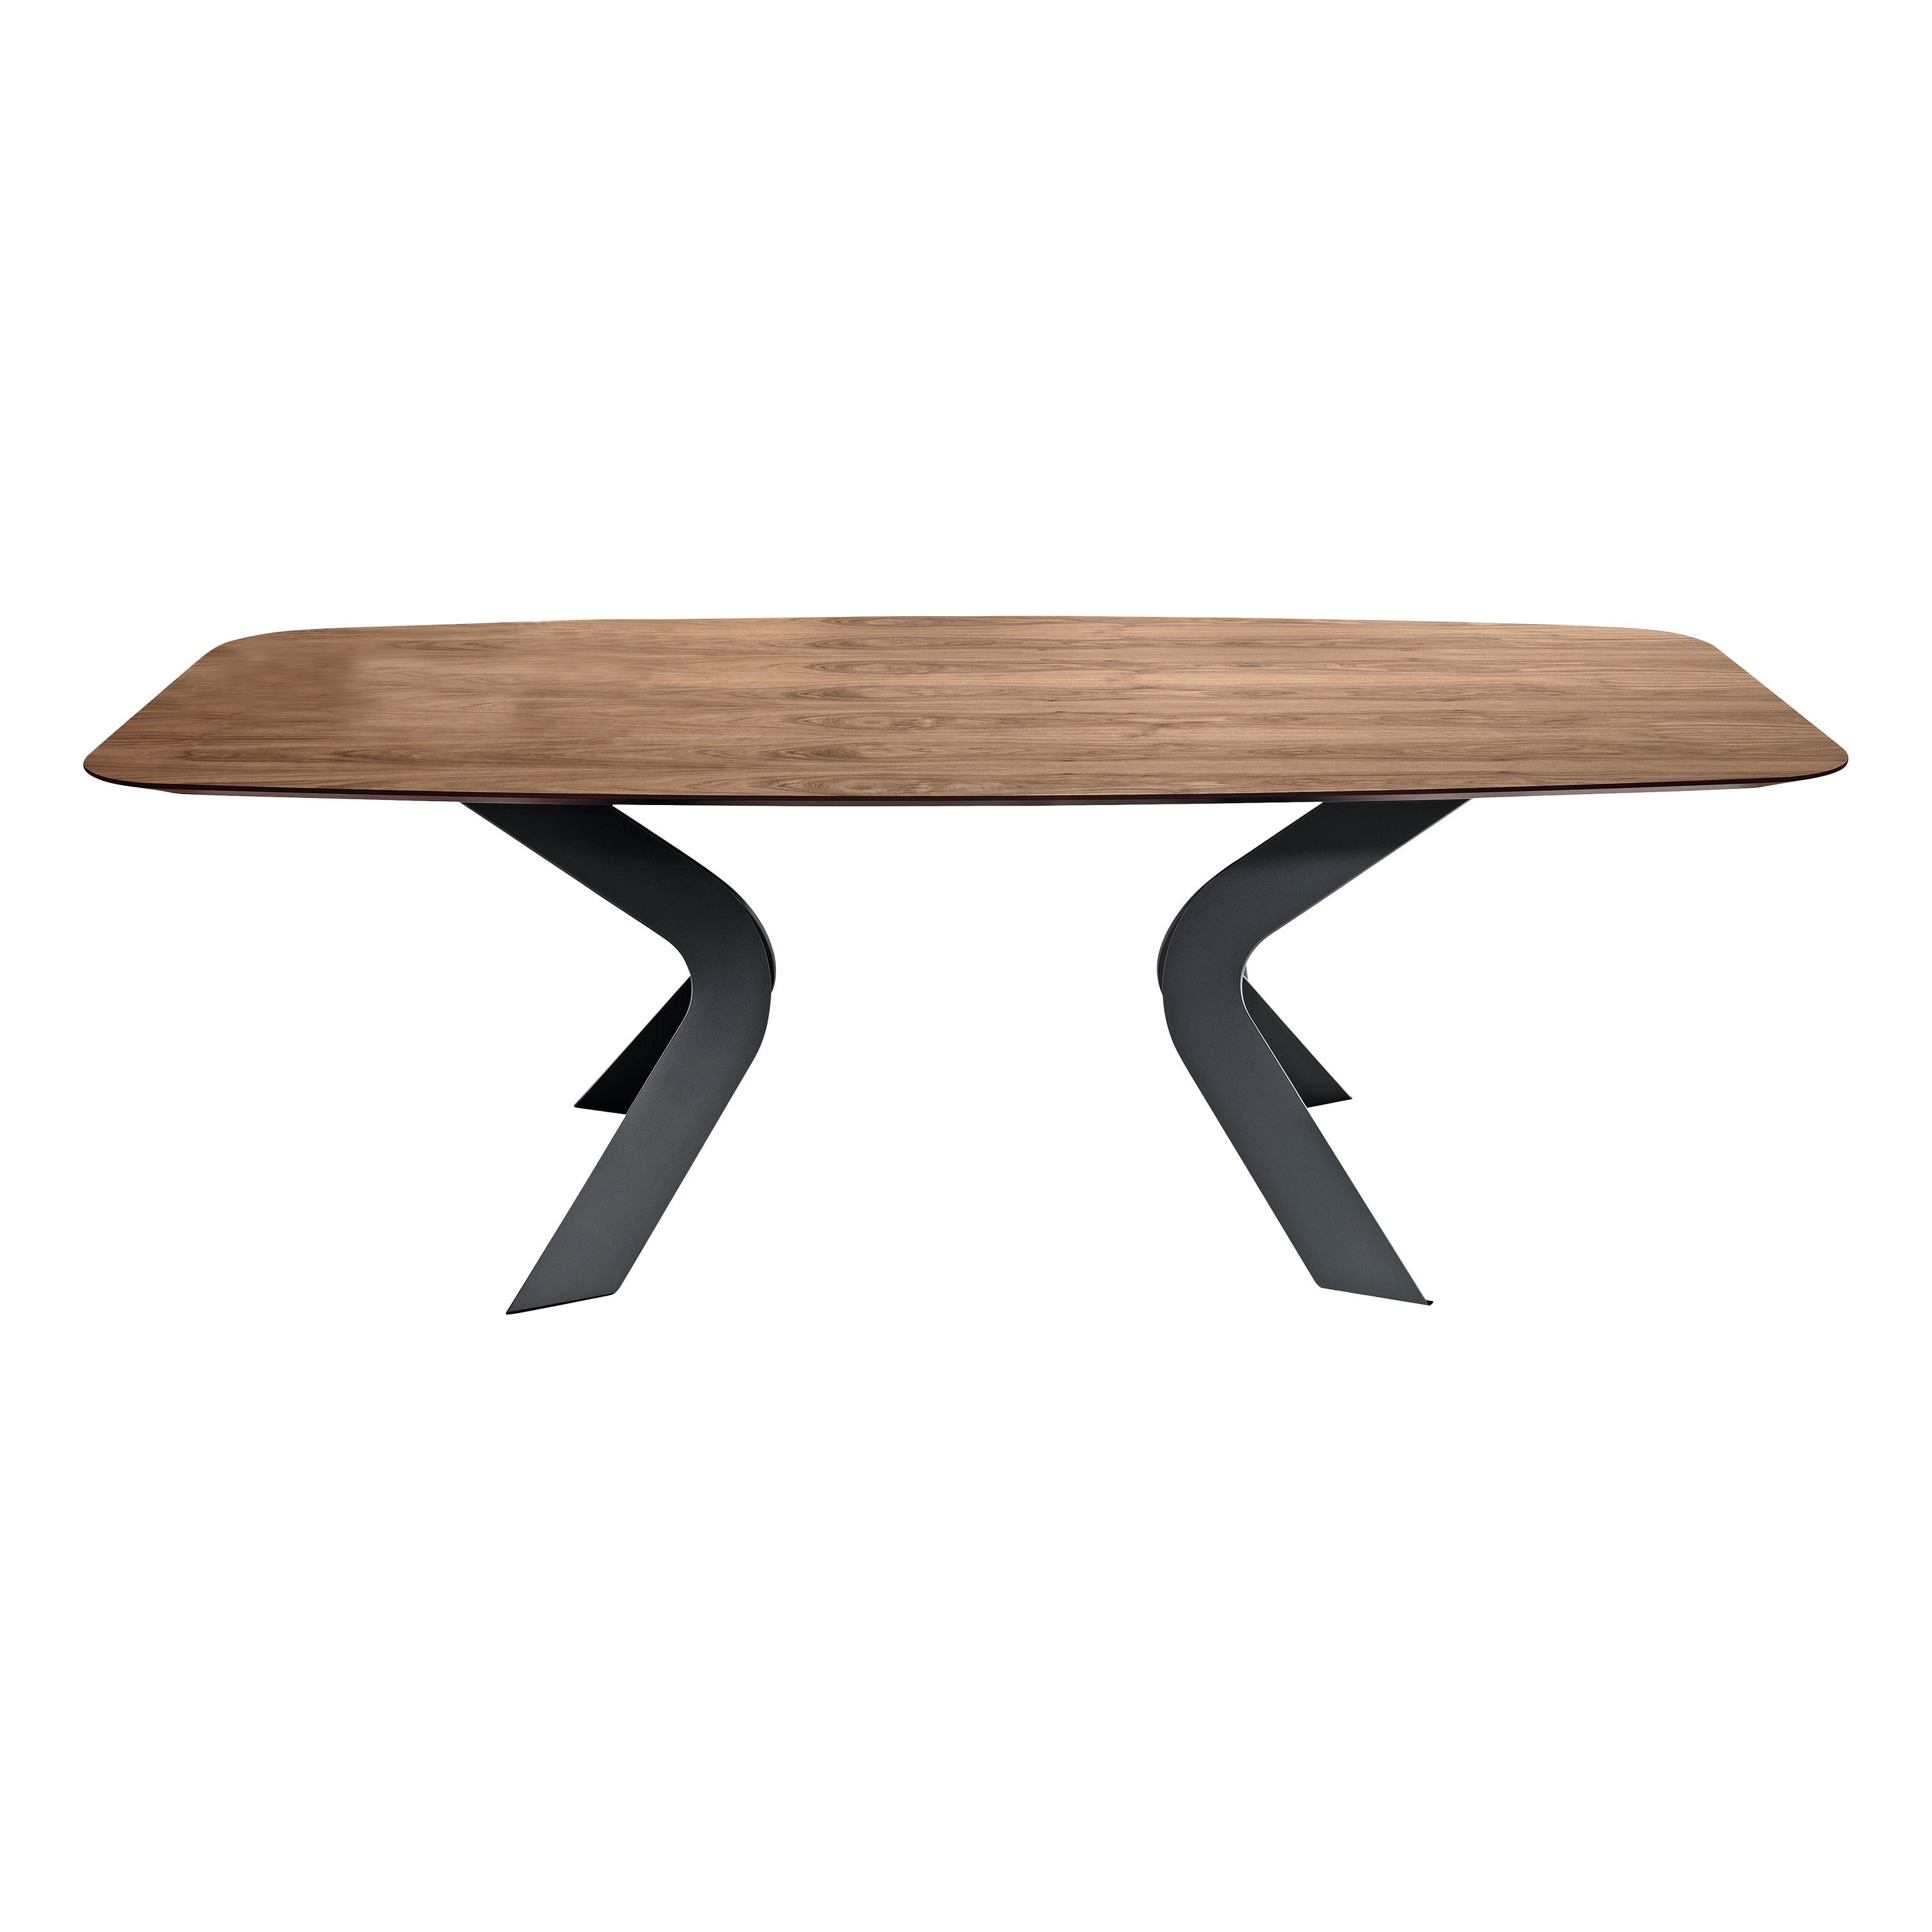 Bipede Dining Table in Steel Base, Black Varnish, by Miniforms Lab